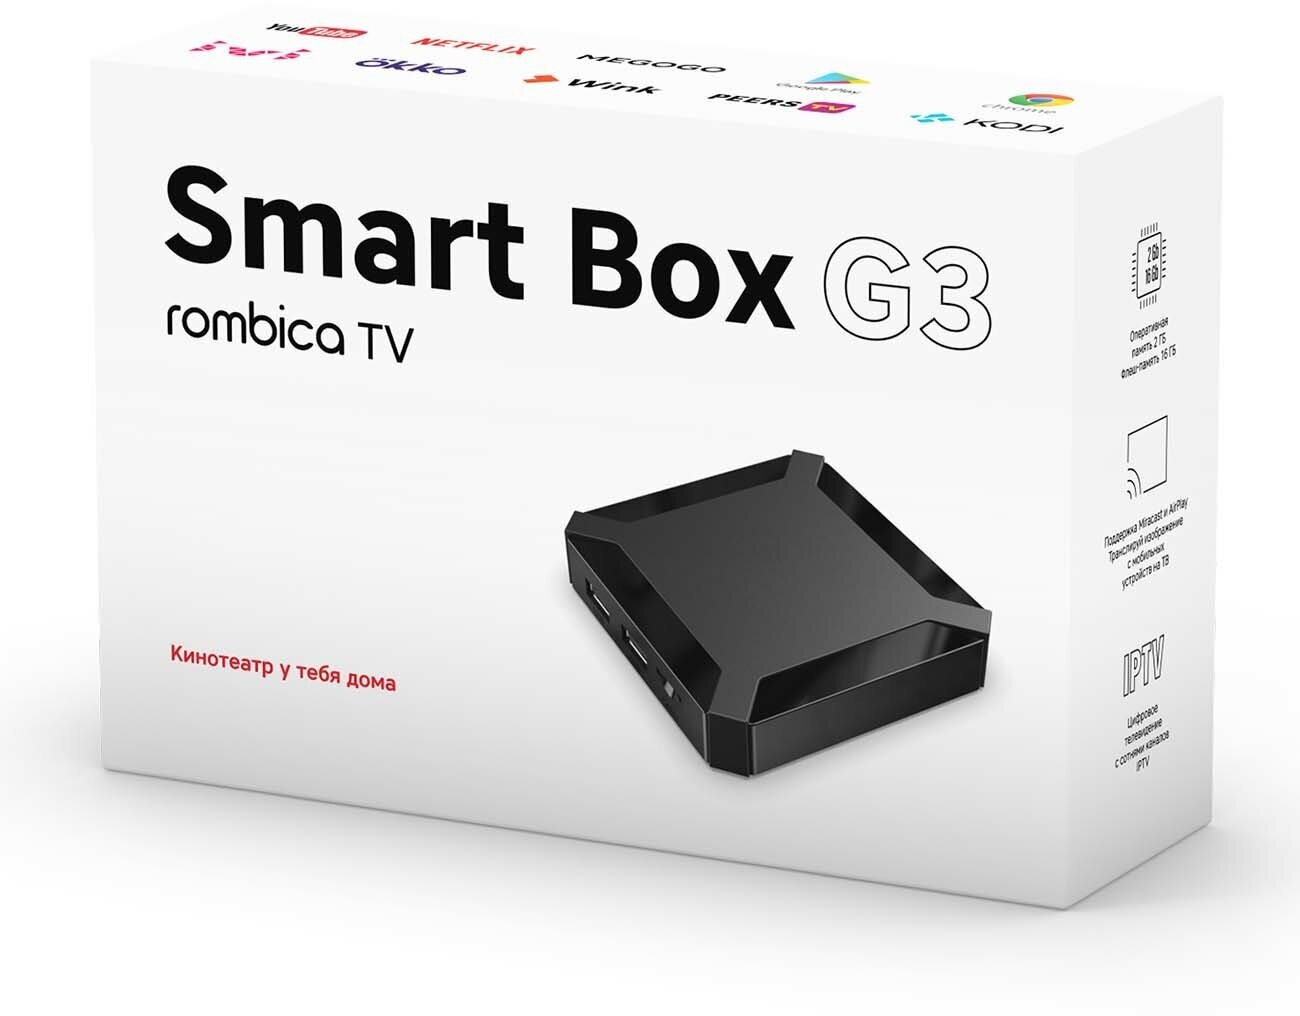 Smart-TV приставка Rombica Smart Box G3